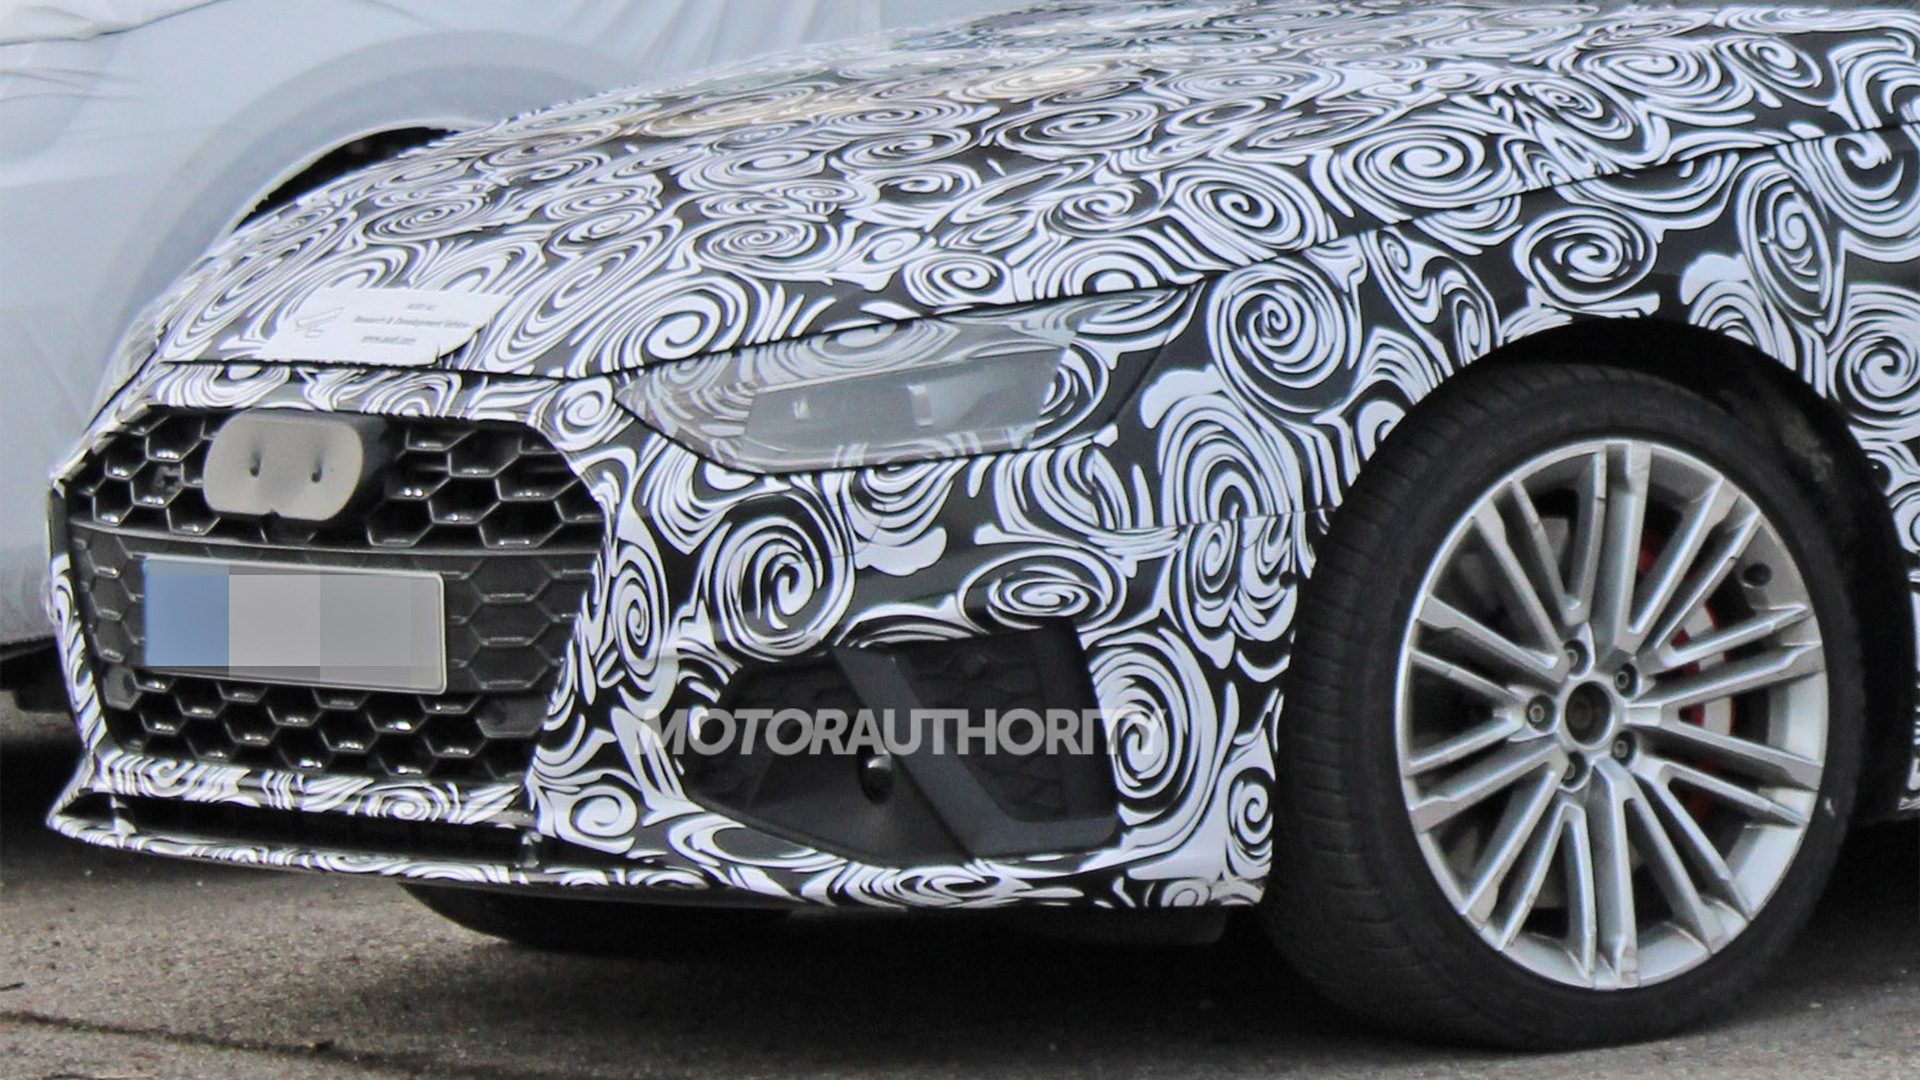 2021 Audi S4 Avant facelift spy shots - Image via S. Baldauf/SB-Medien